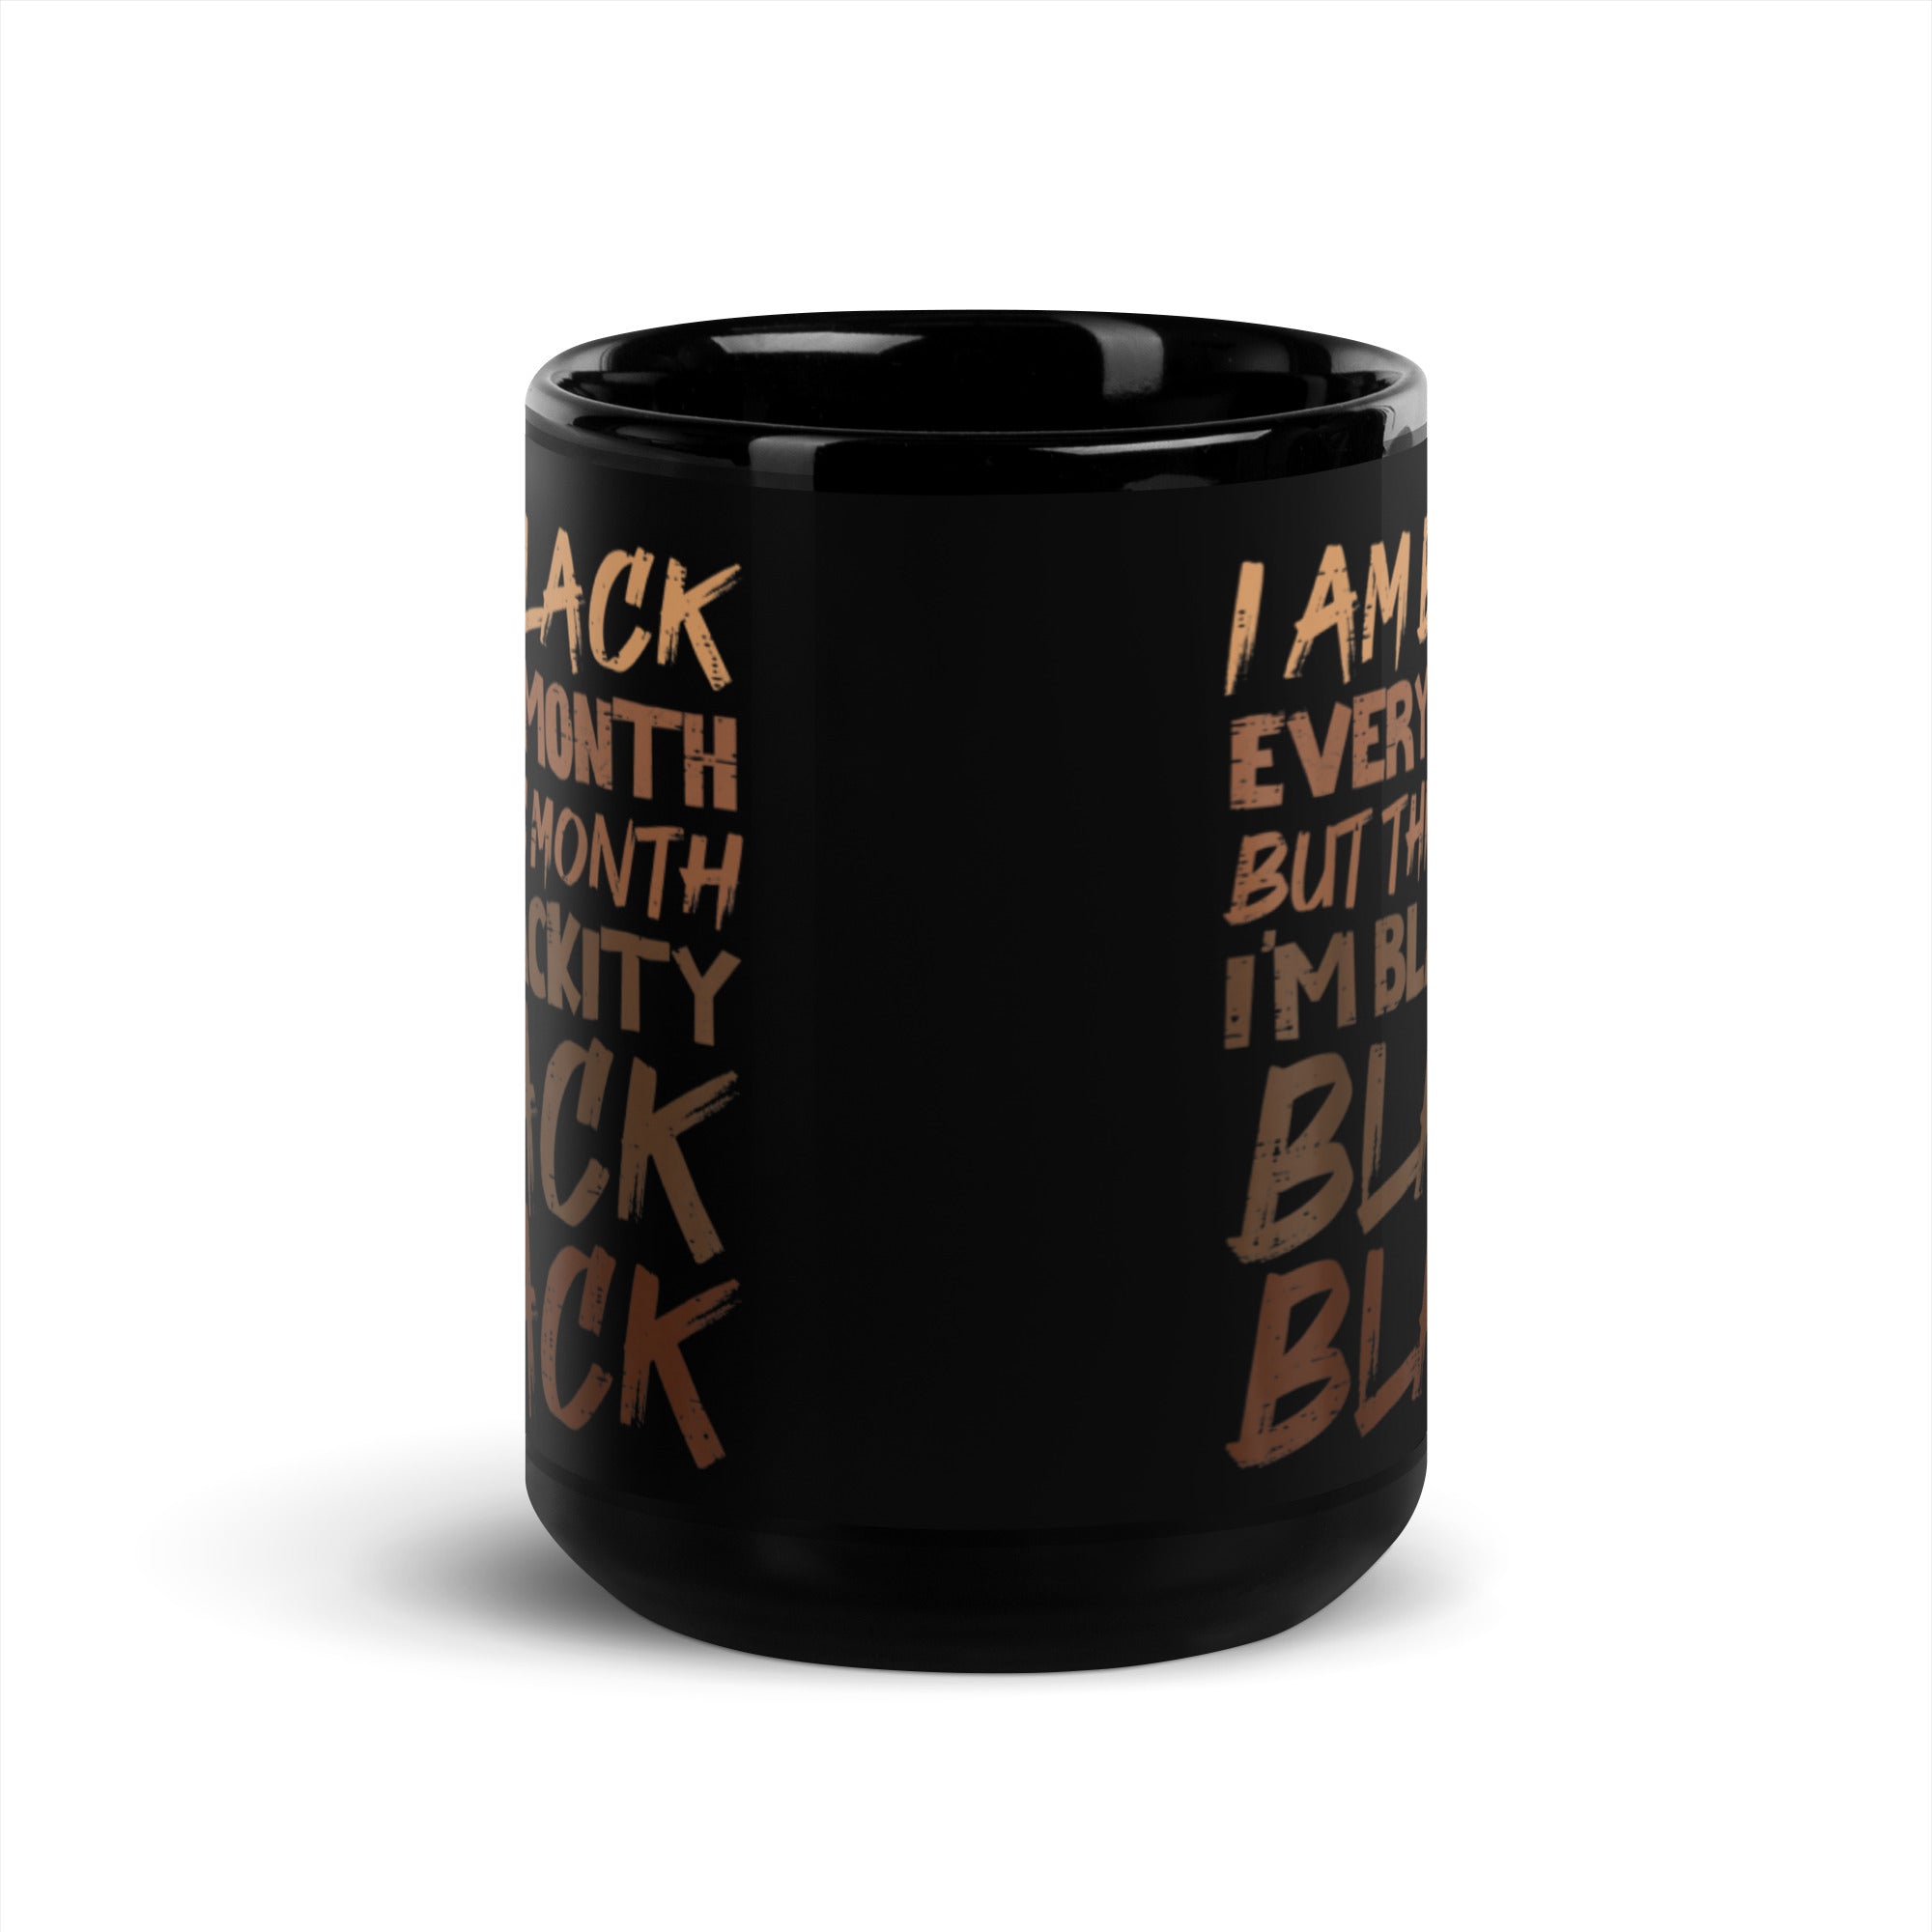 "BLICKITY BLACK" Black Glossy Mug